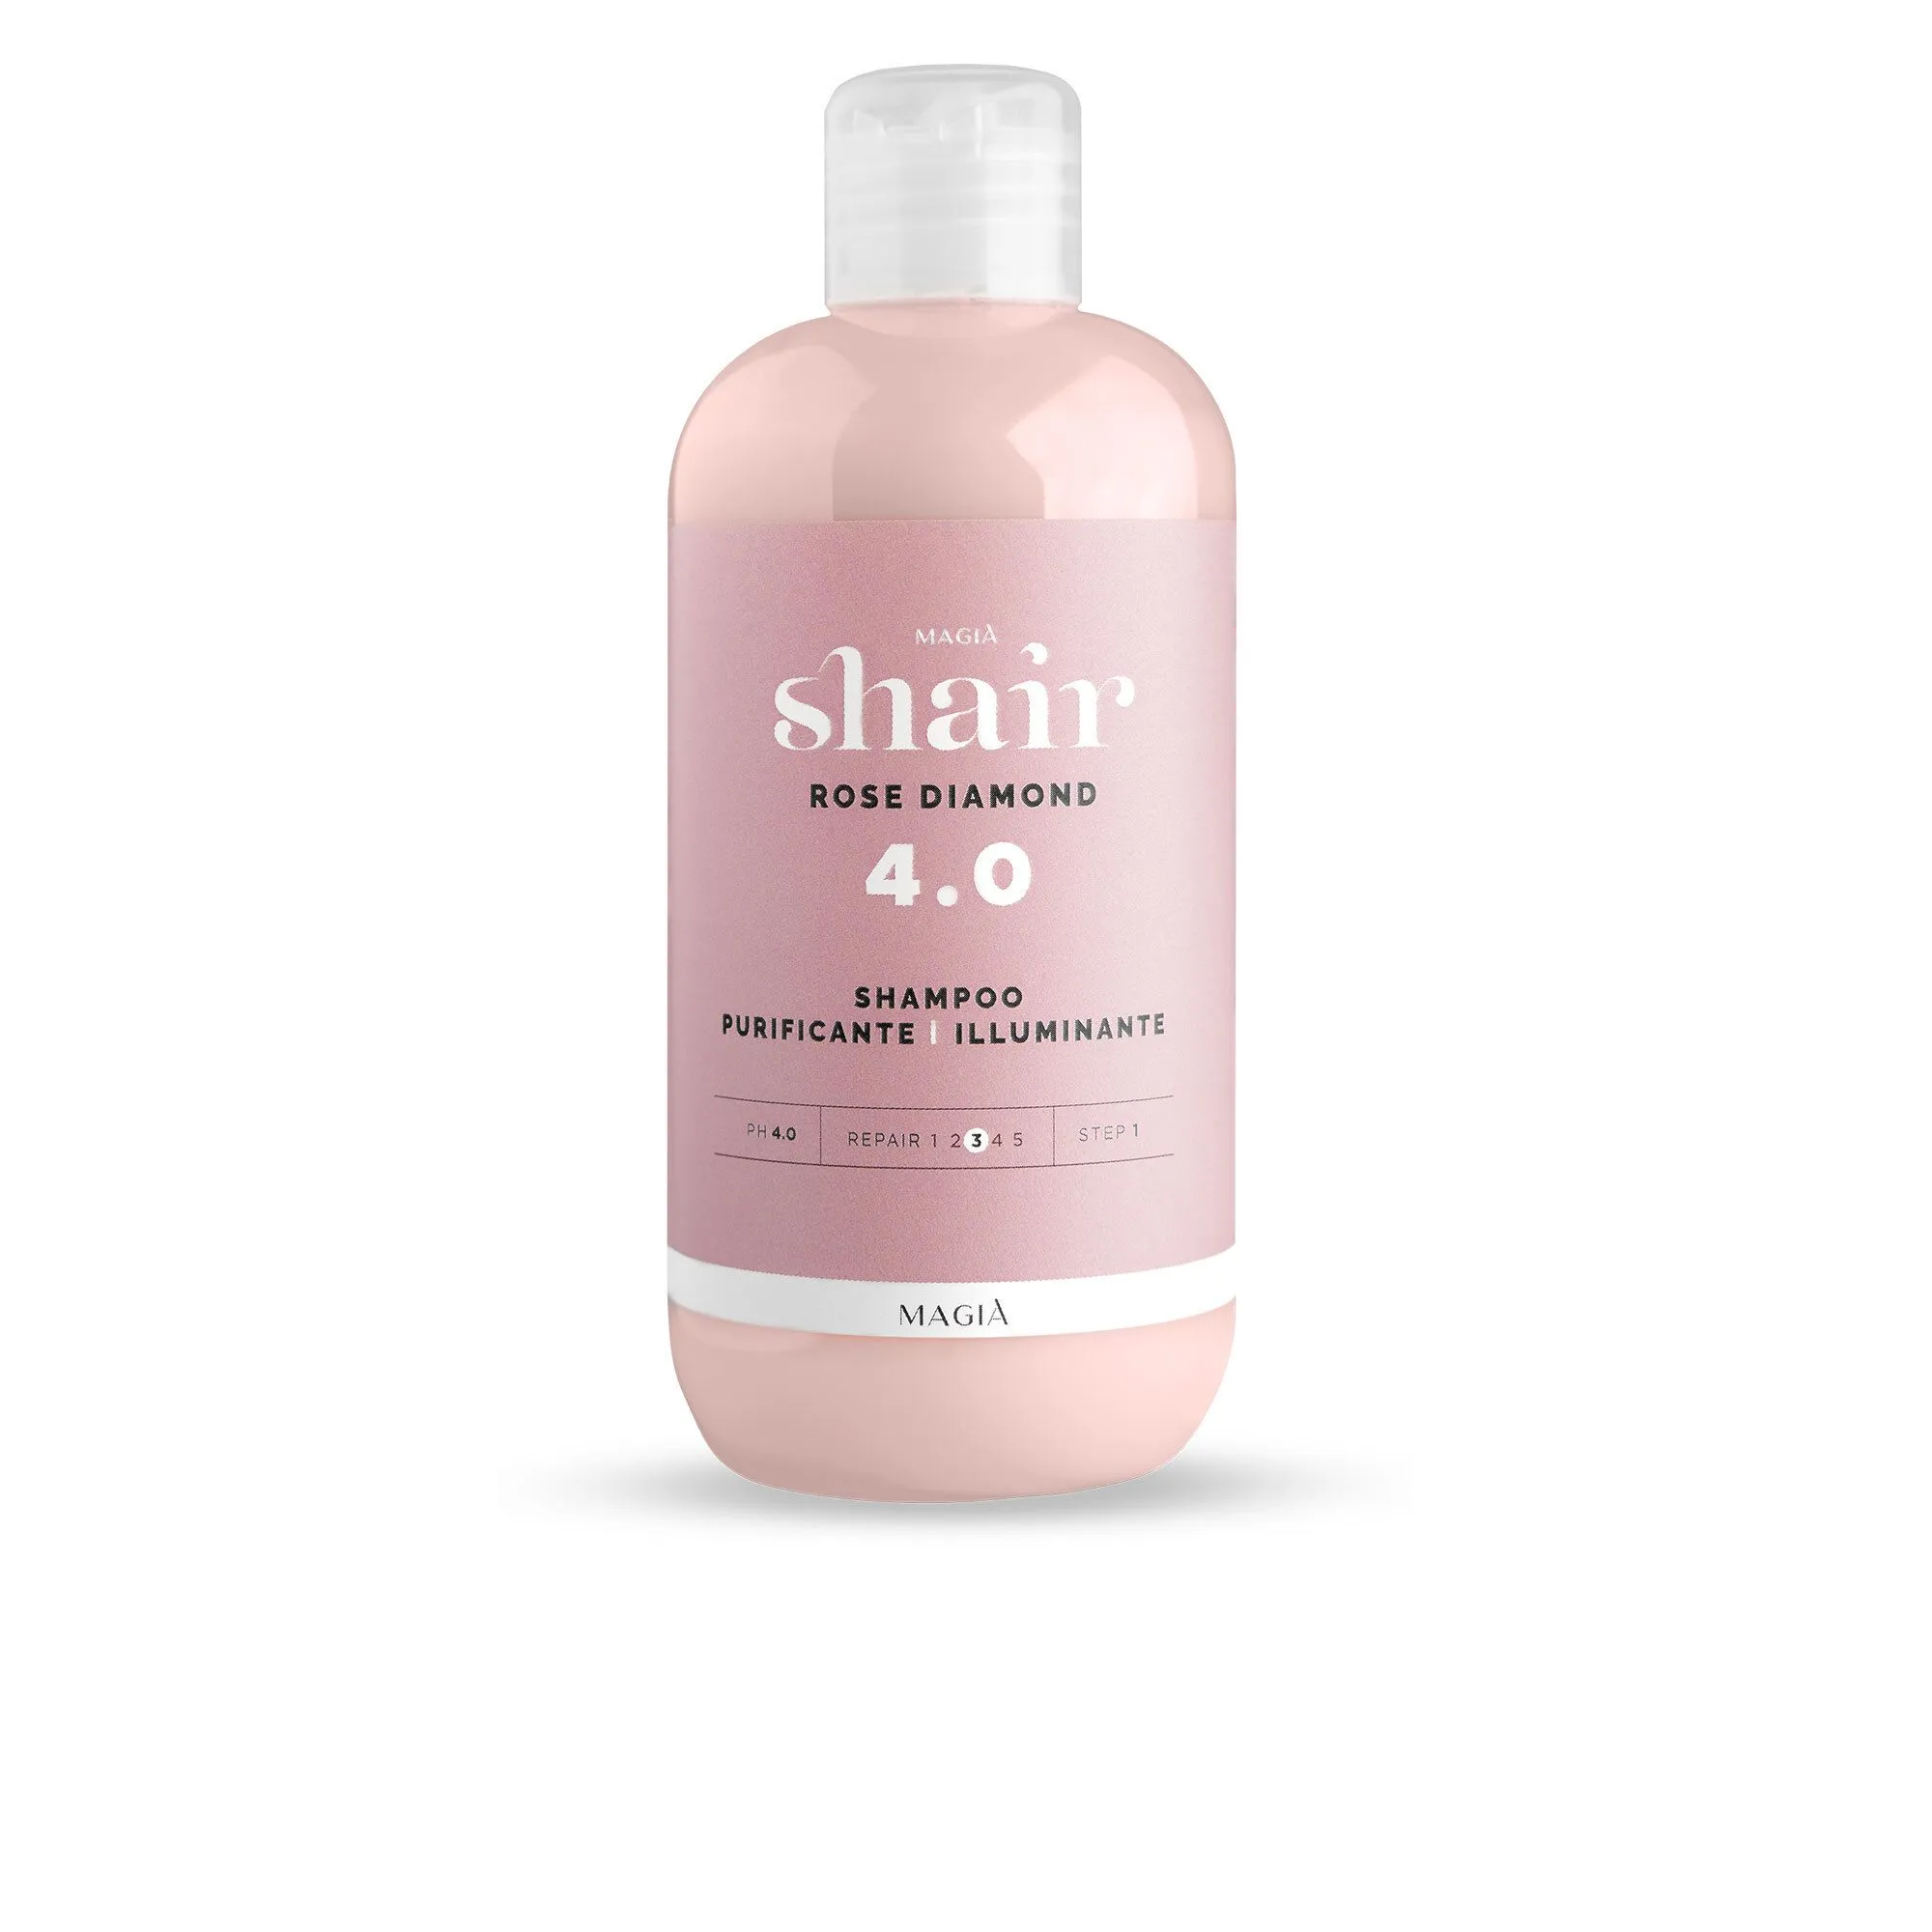 Rose Diamond Shampoo illuminante ph 4.0